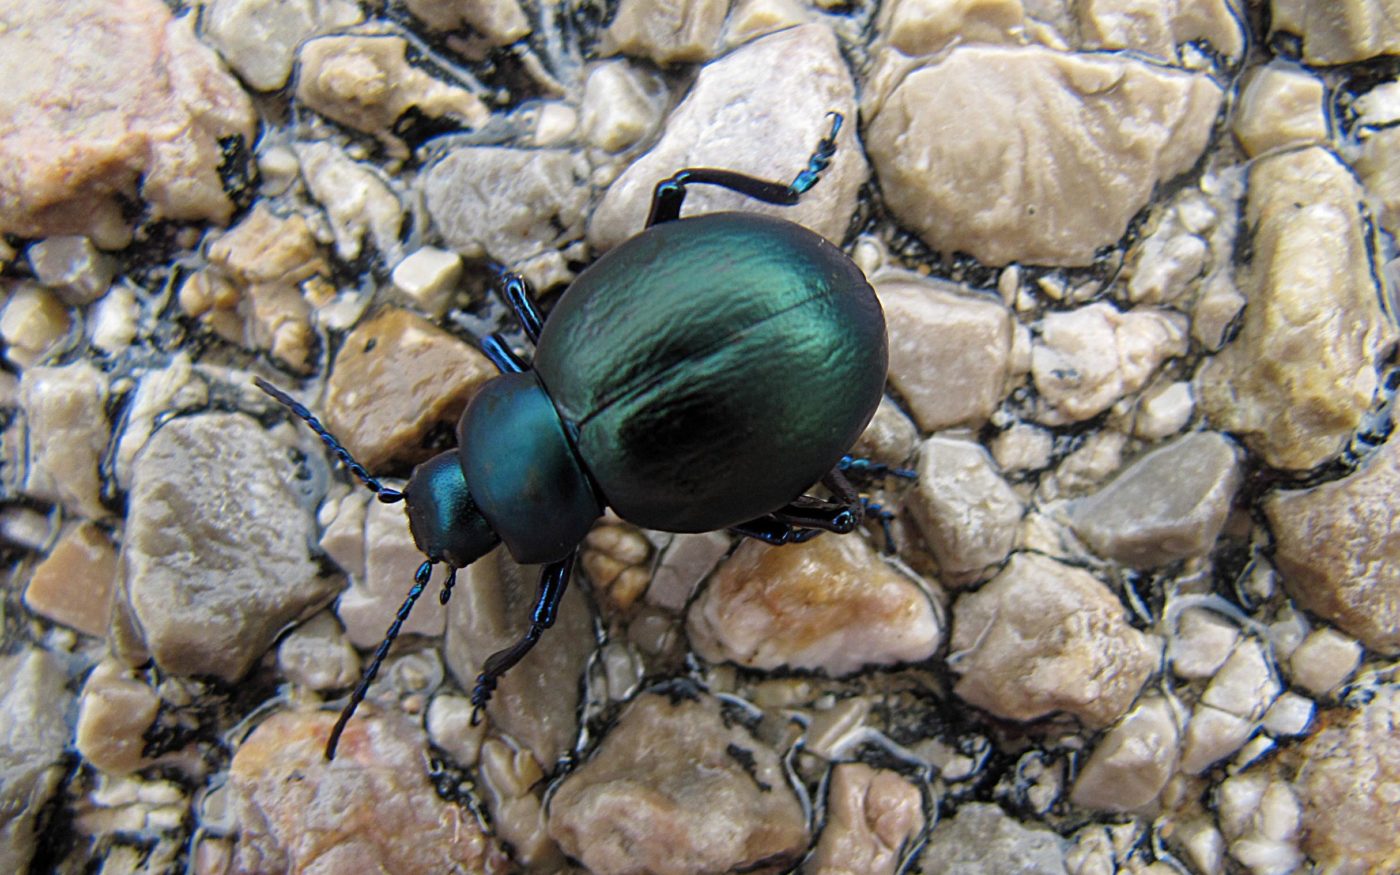 Beetle on wet pavement, Mallorca